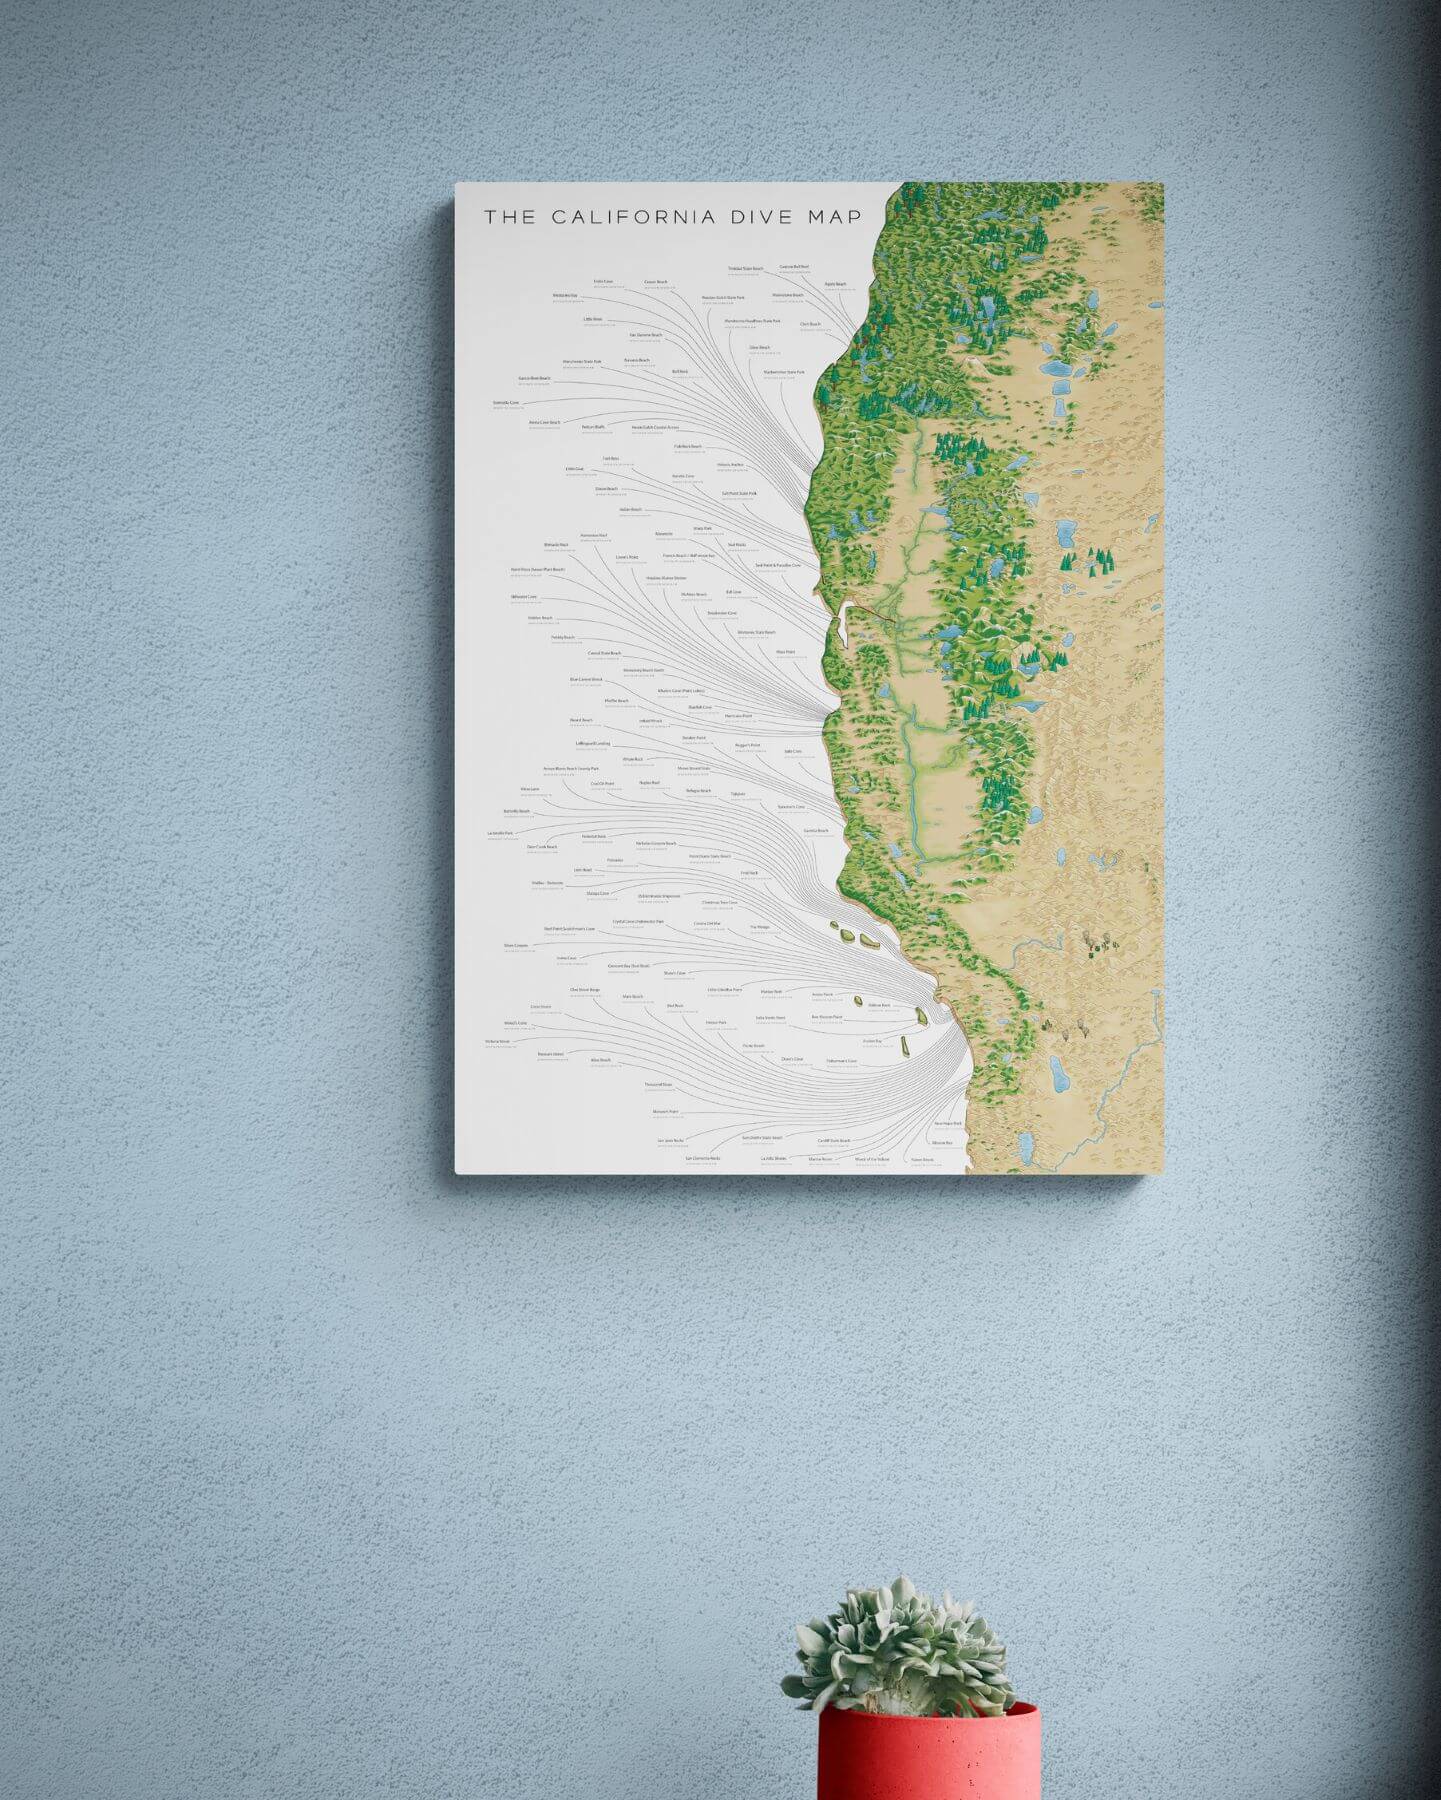 The California Dive Map